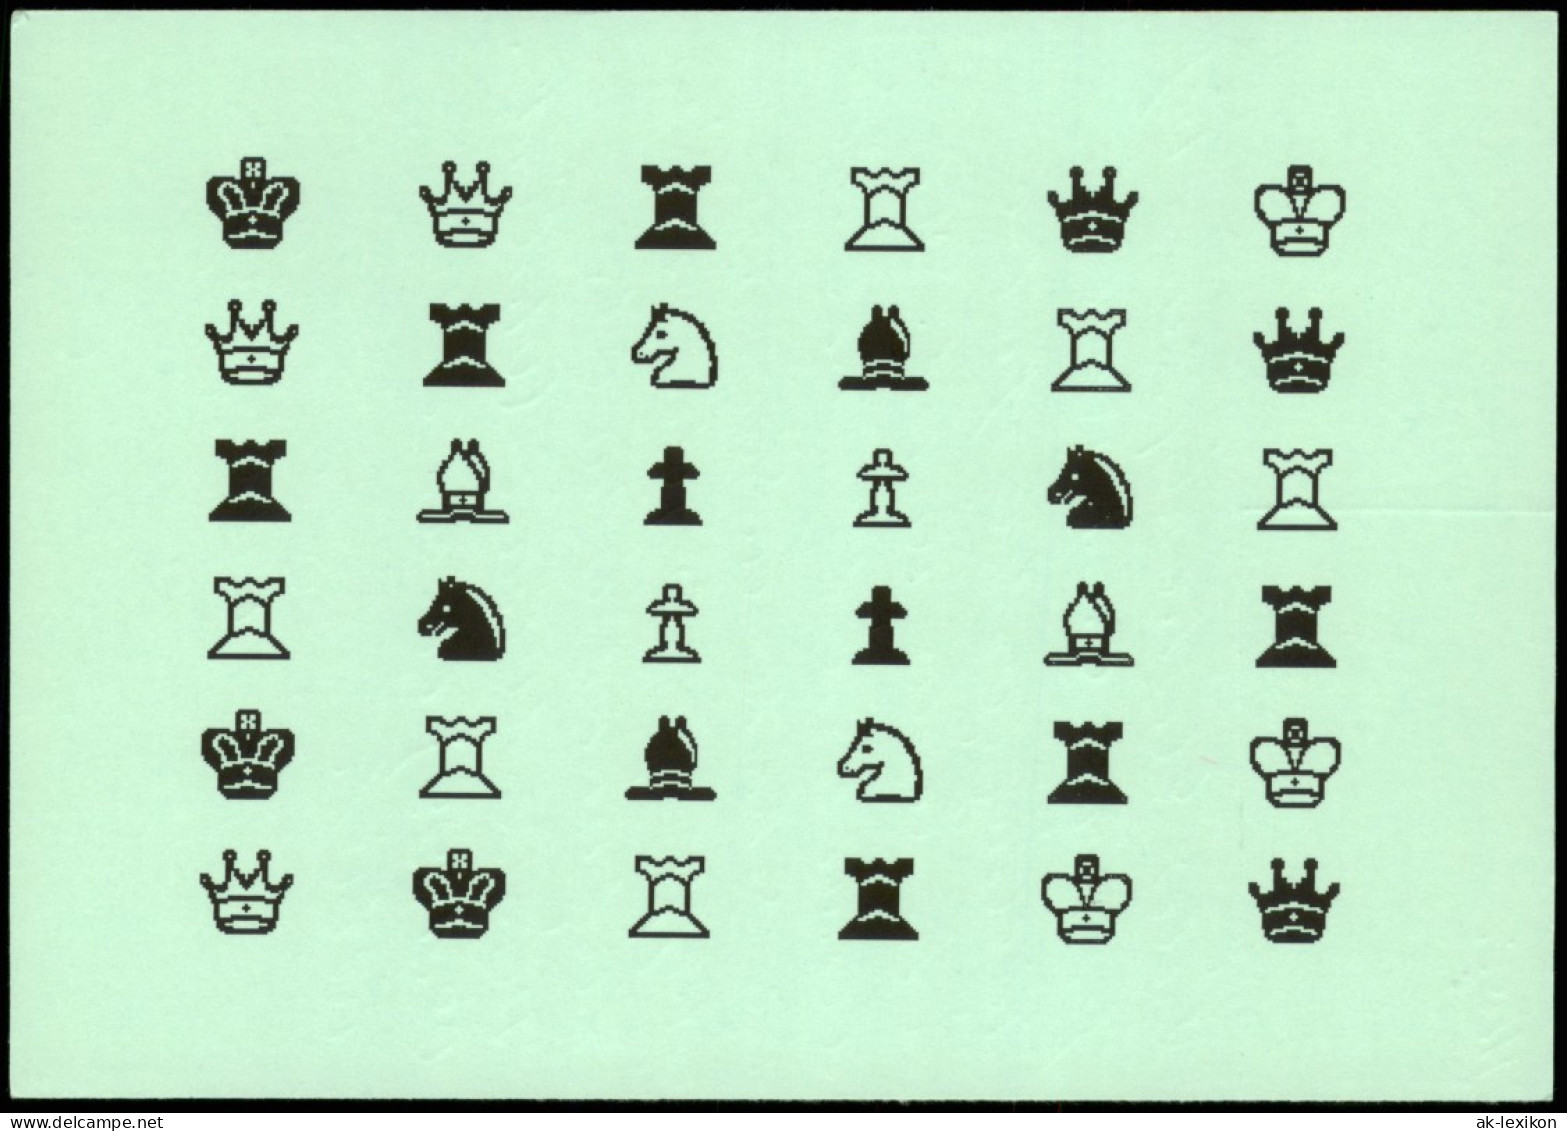 Ansichtskarte  Schach (Chess) Motivkarte Mit Schachfiguren 1999 - Contemporain (à Partir De 1950)